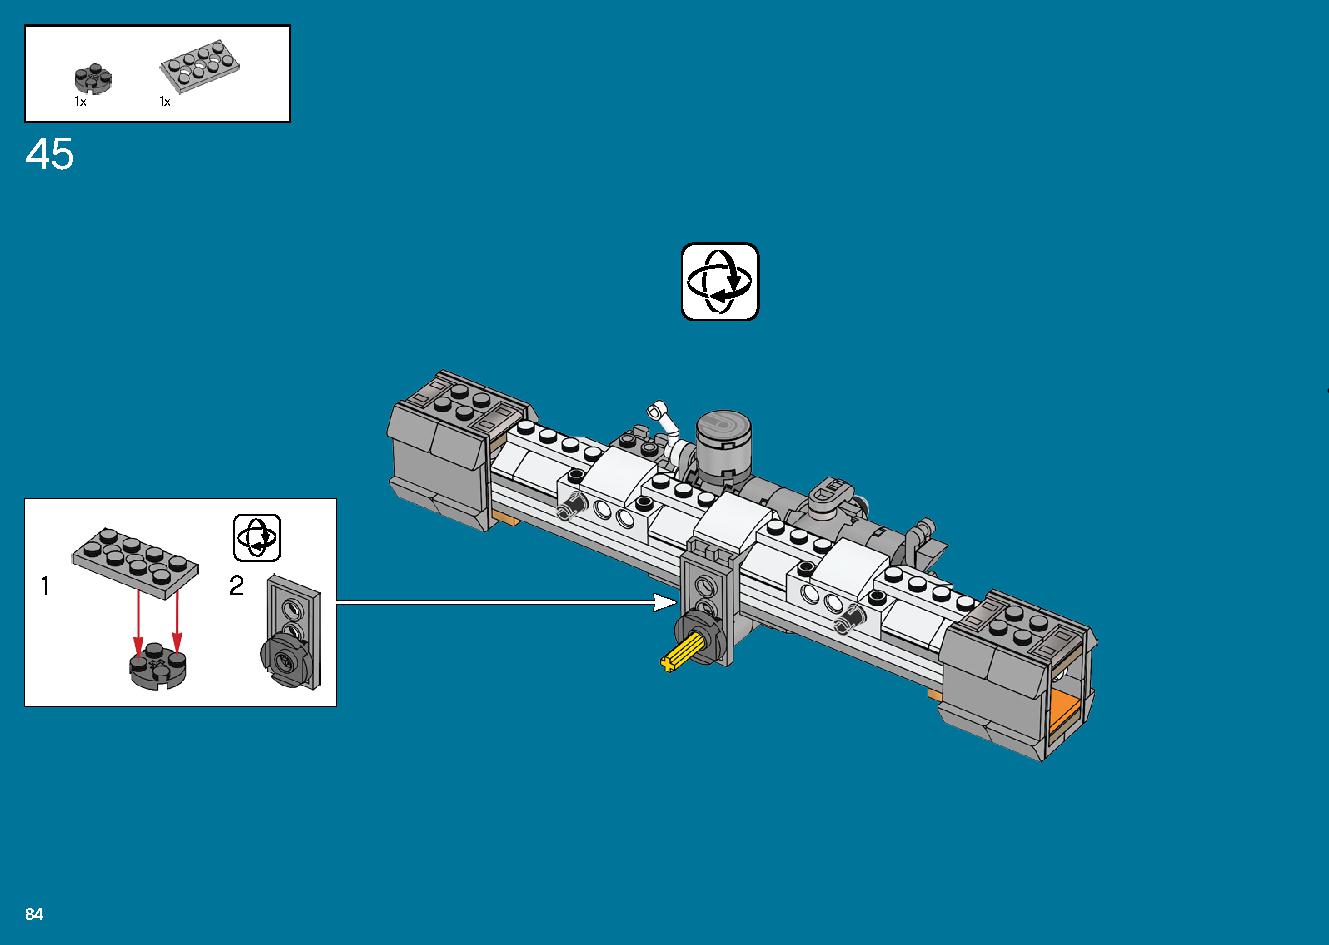 International Space Station 21321 レゴの商品情報 レゴの説明書・組立方法 84 page